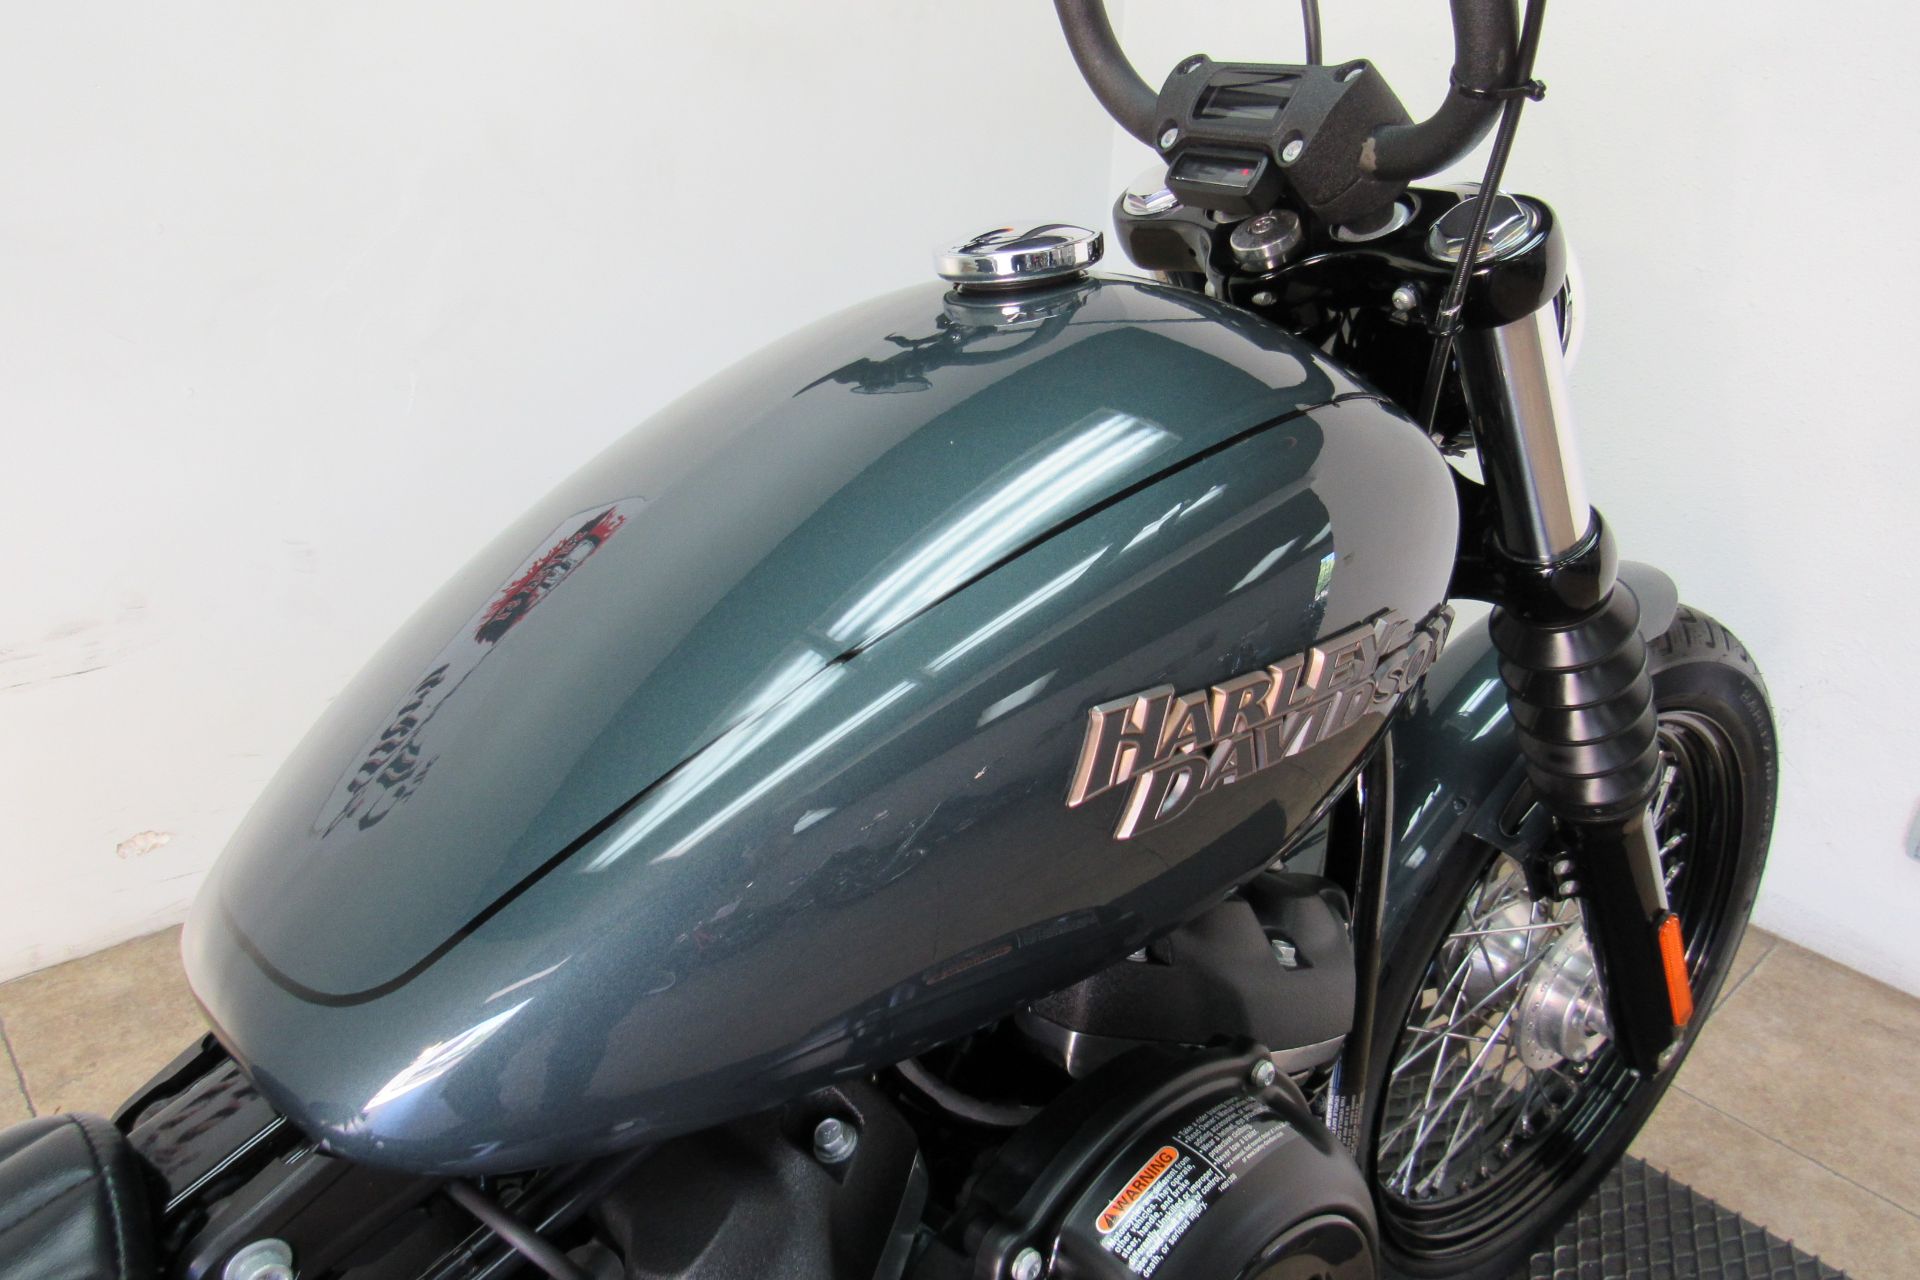 2020 Harley-Davidson Street Bob® in Temecula, California - Photo 17